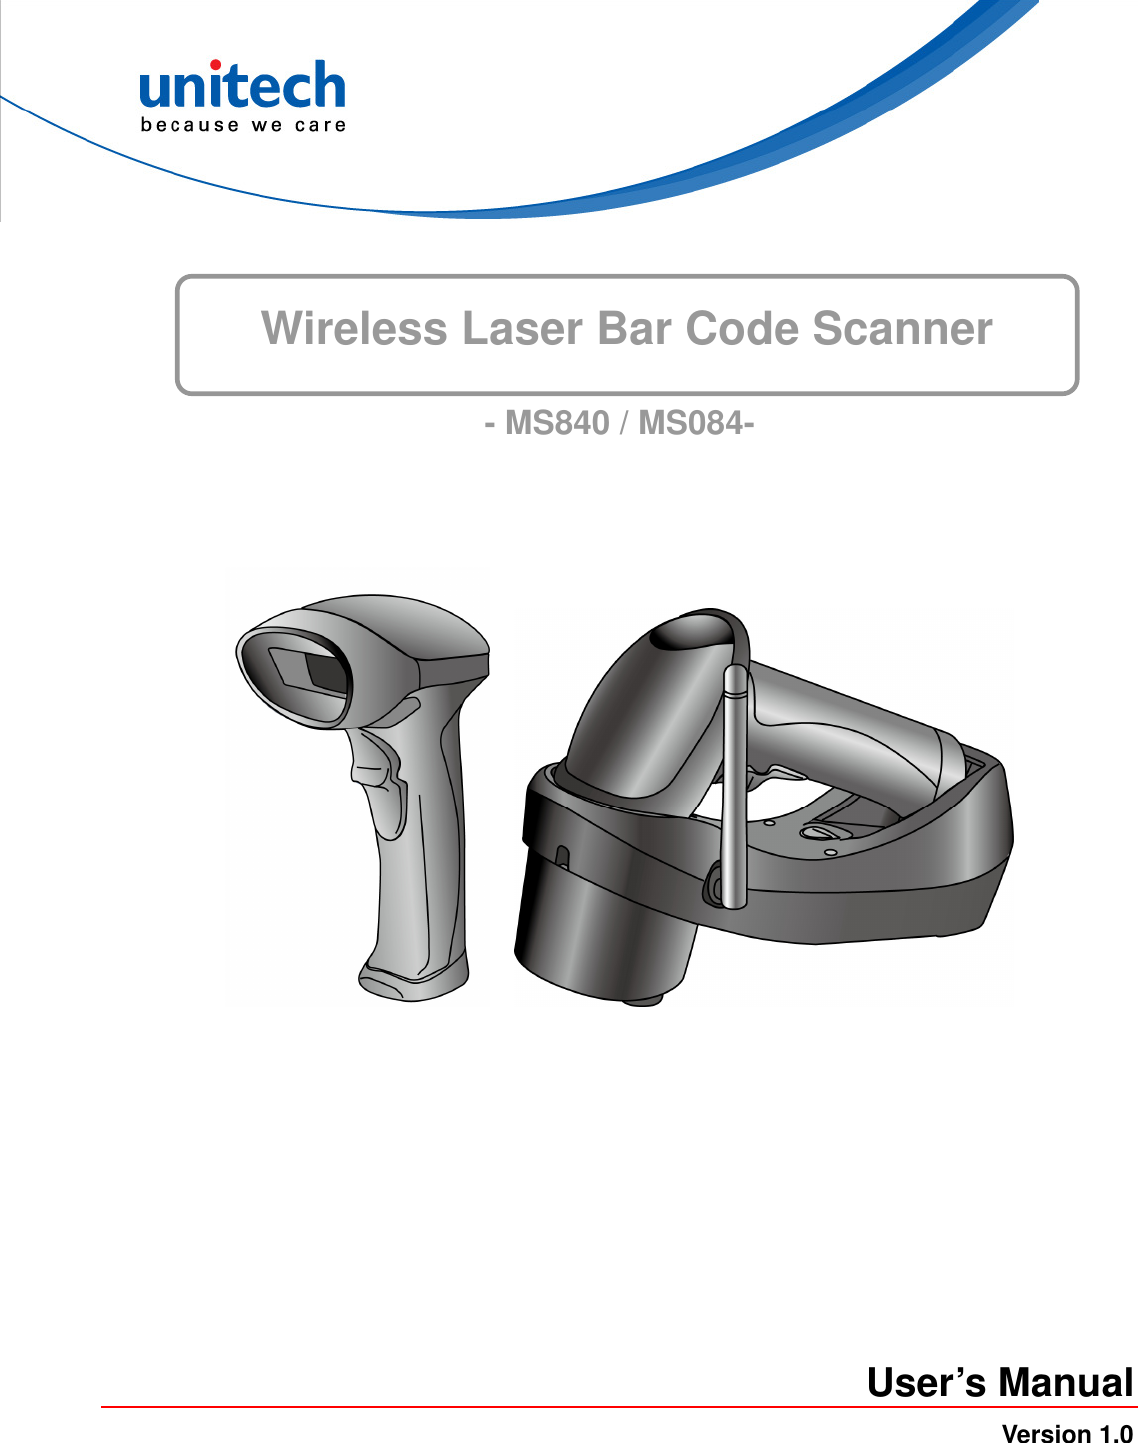         - MS840 / MS084-       User’s Manual Version 1.0Wireless Laser Bar Code Scanner 